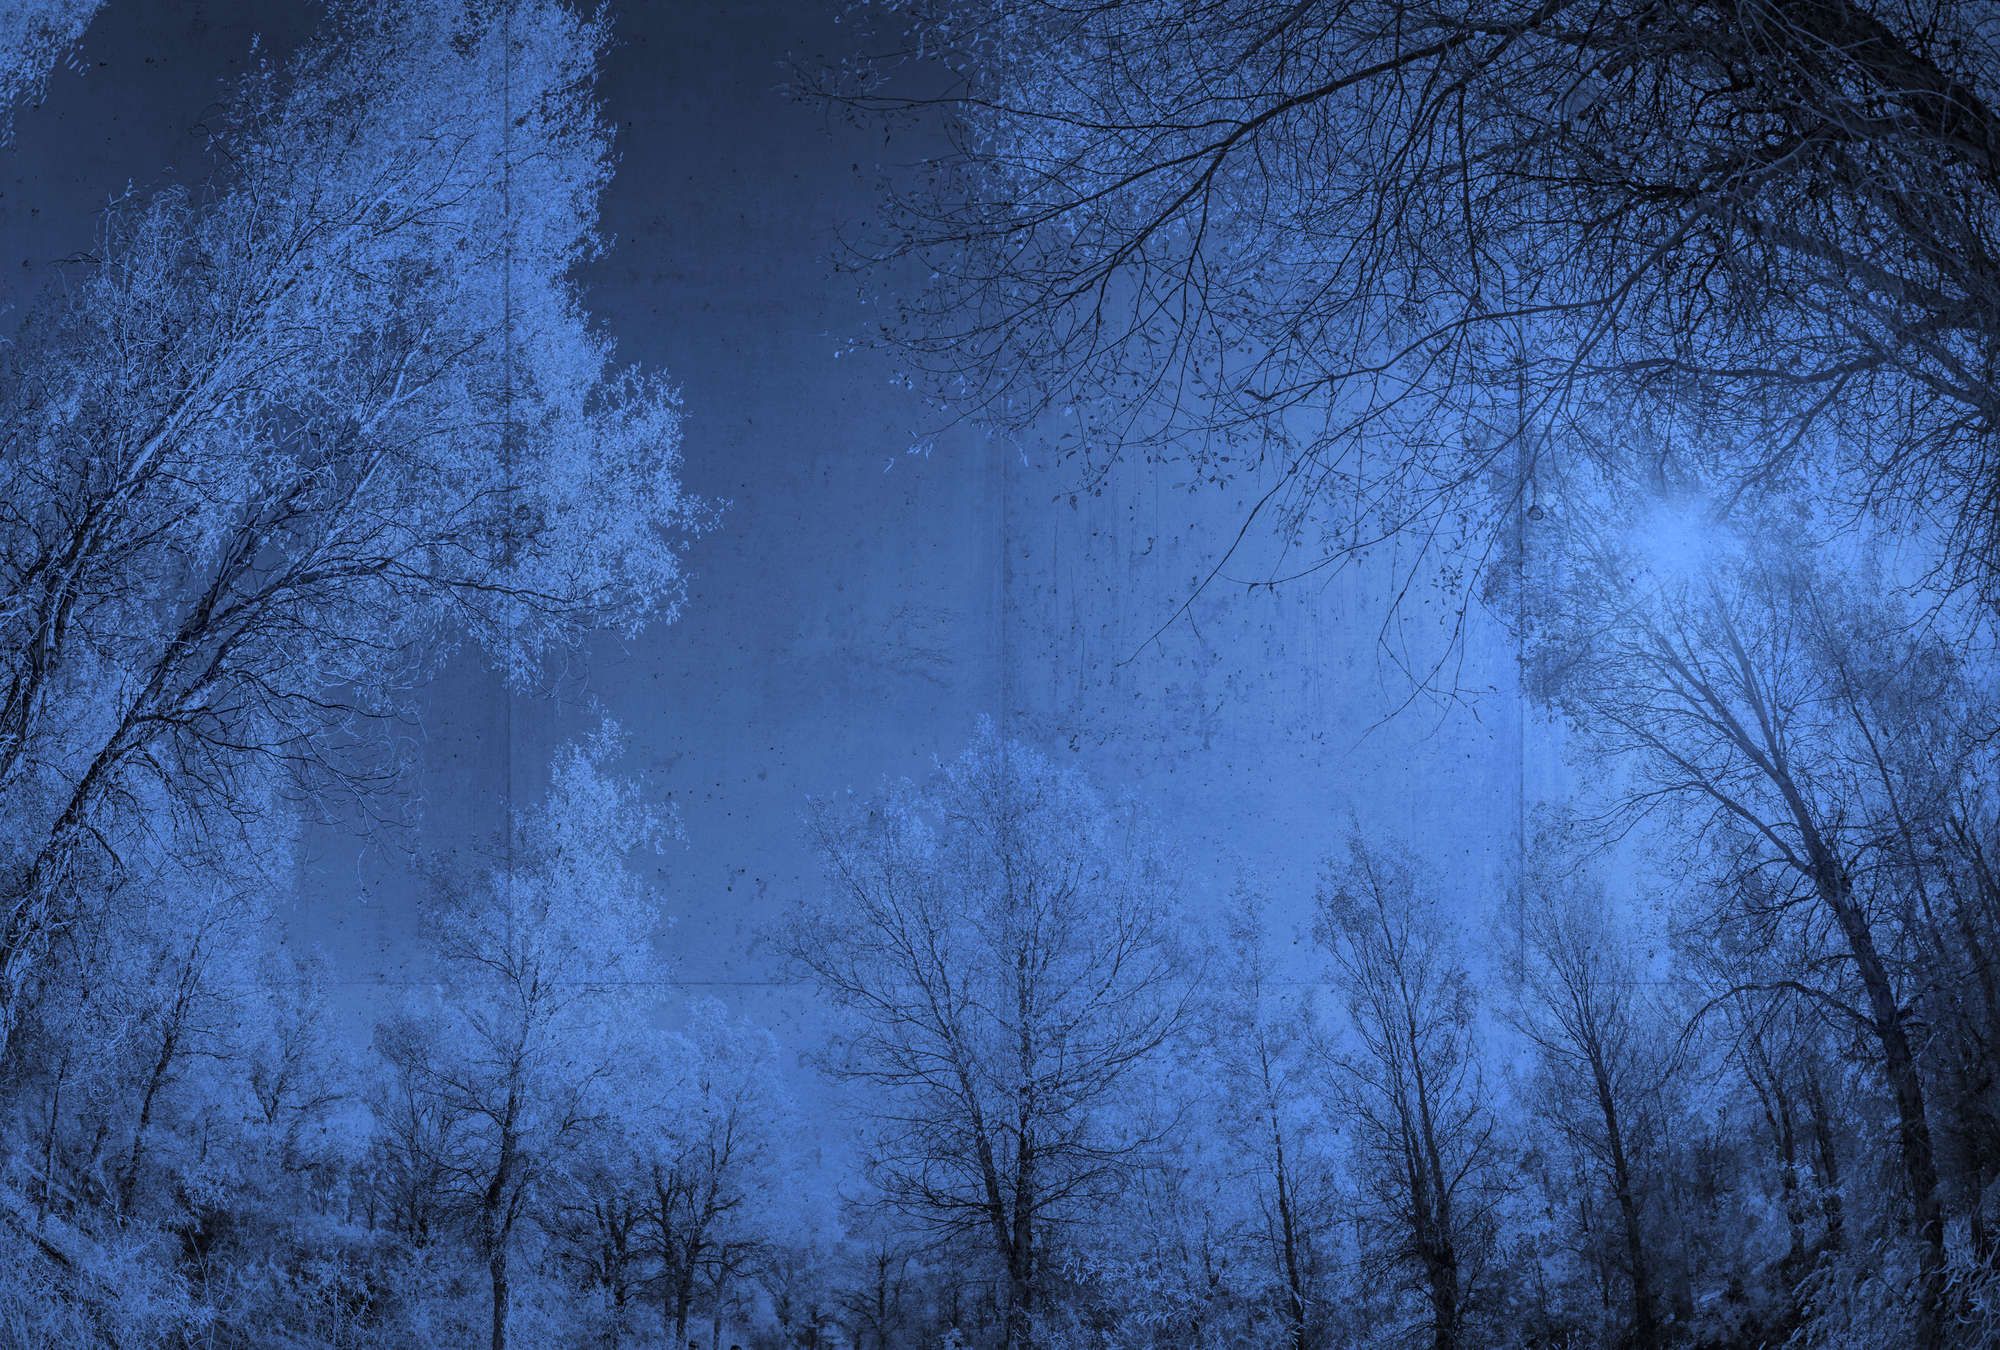             Fototapete Betonoptik & Wald-Landschaft – Blau, Schwarz
        